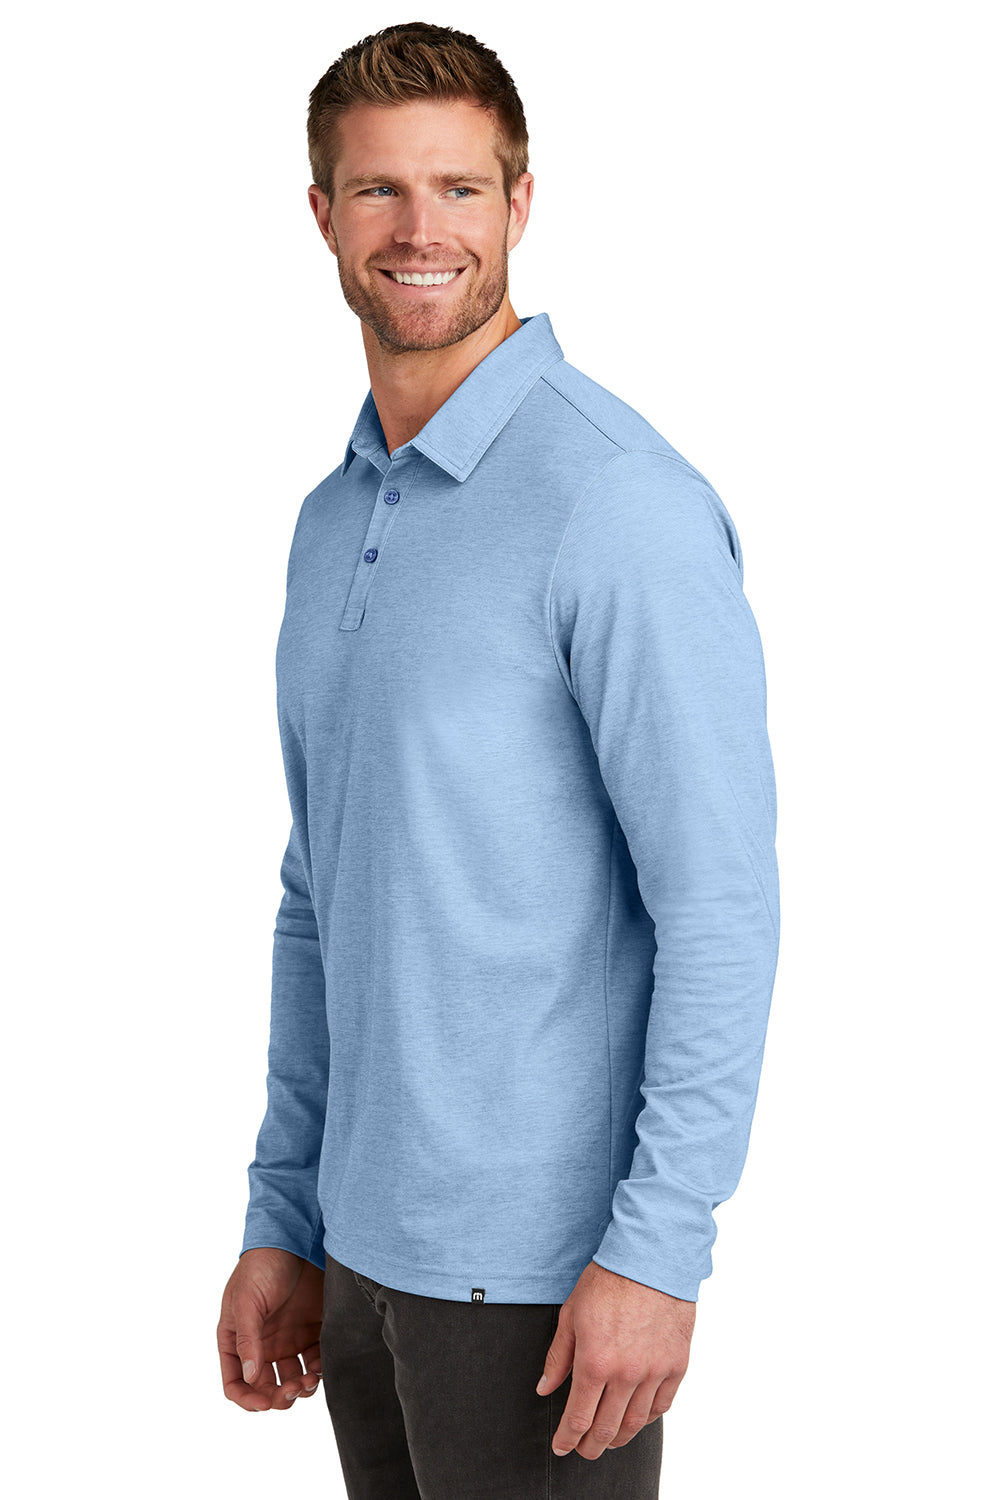 TravisMathew TM1MZ343 Mens Oceanside Moisture Wicking Long Sleeve Polo Shirt Heather Allure Blue Model Side